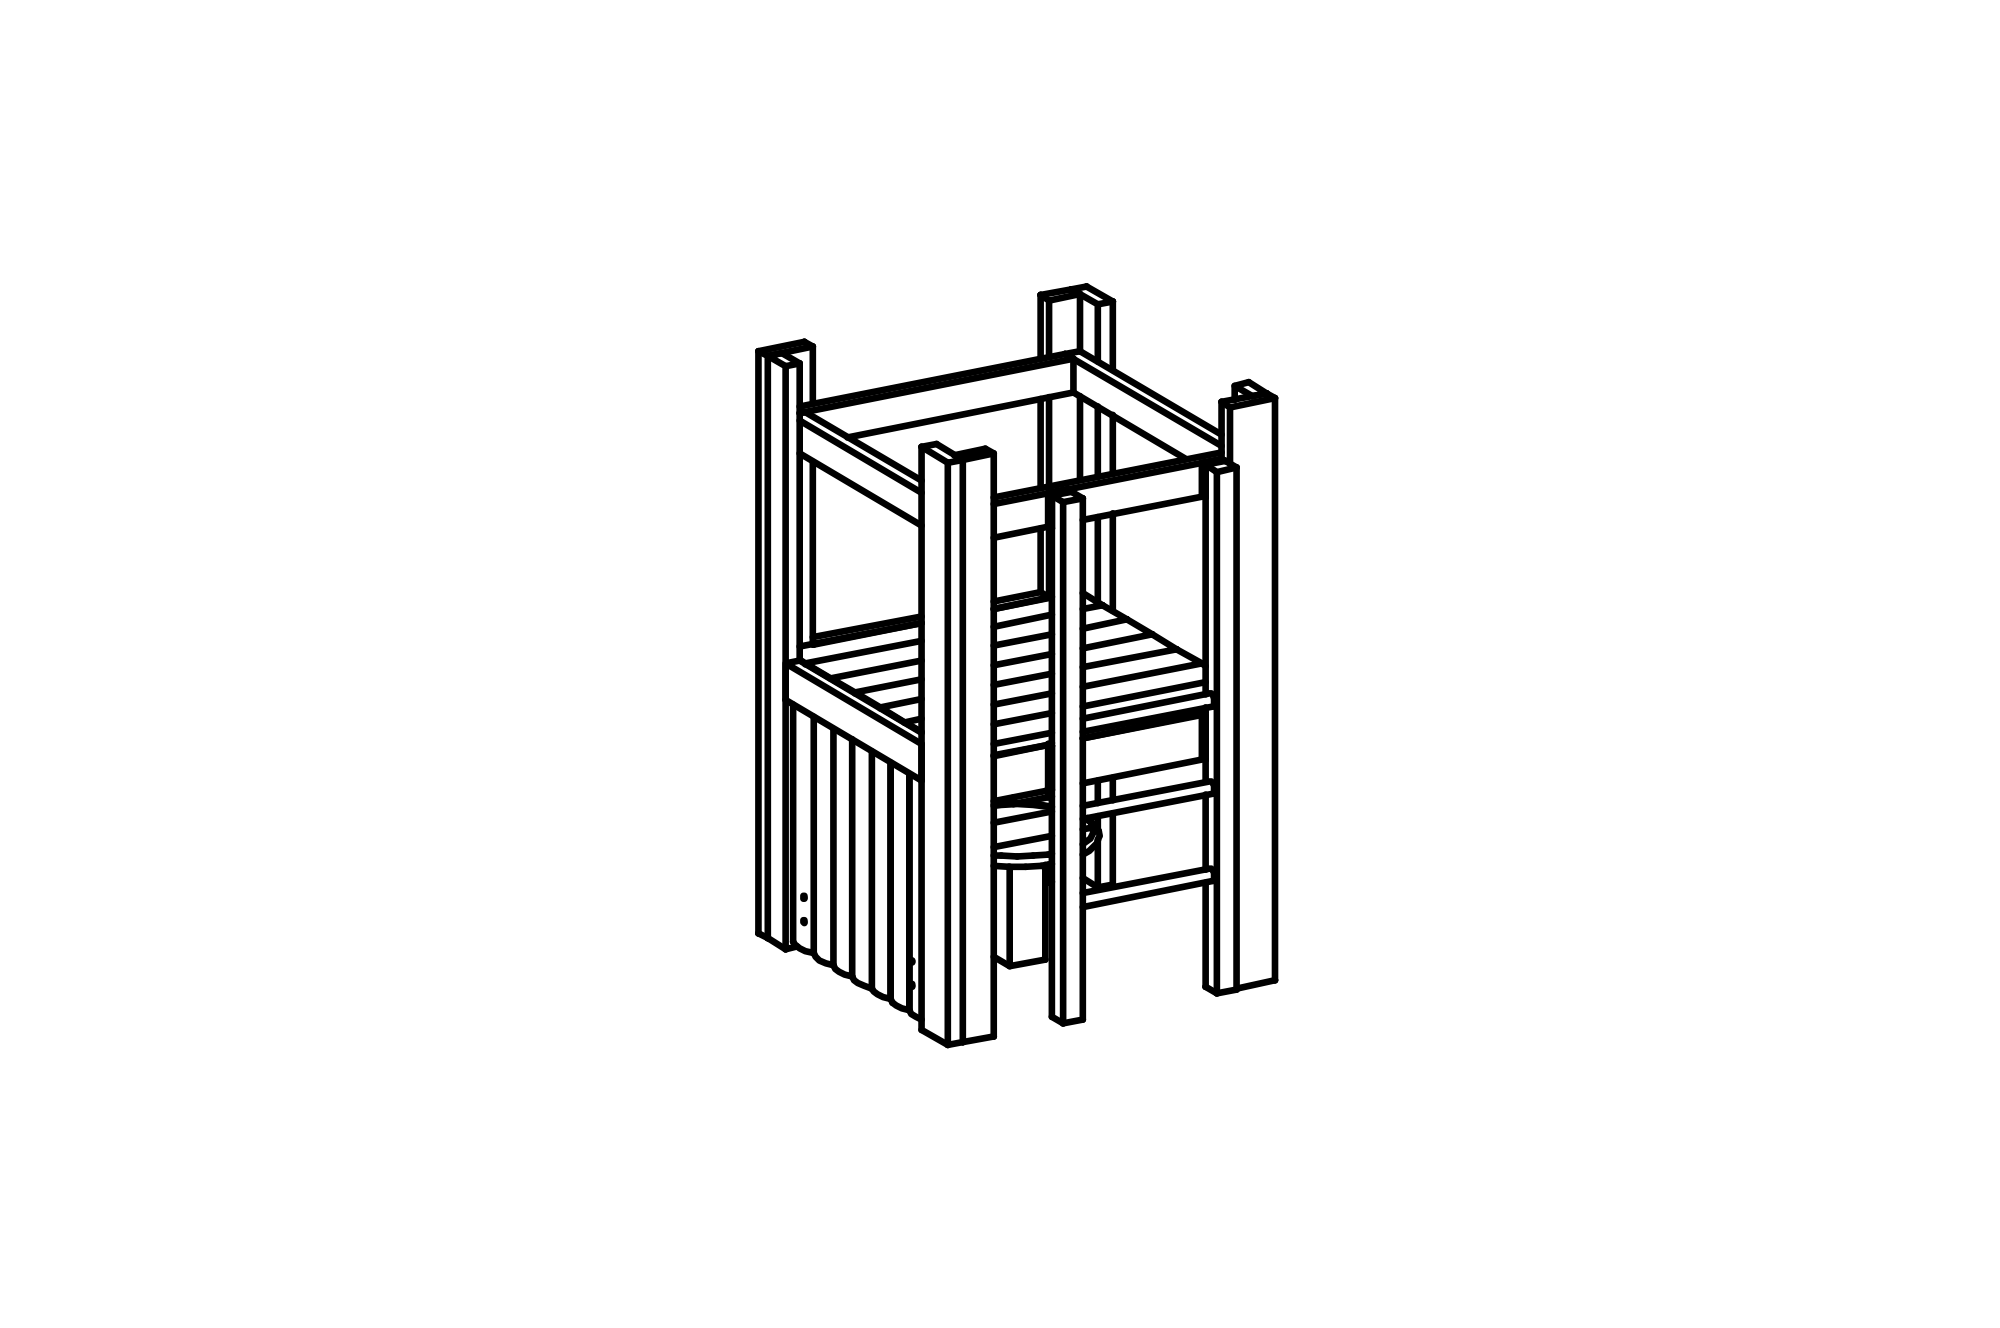 Small Platform Hut with ladder